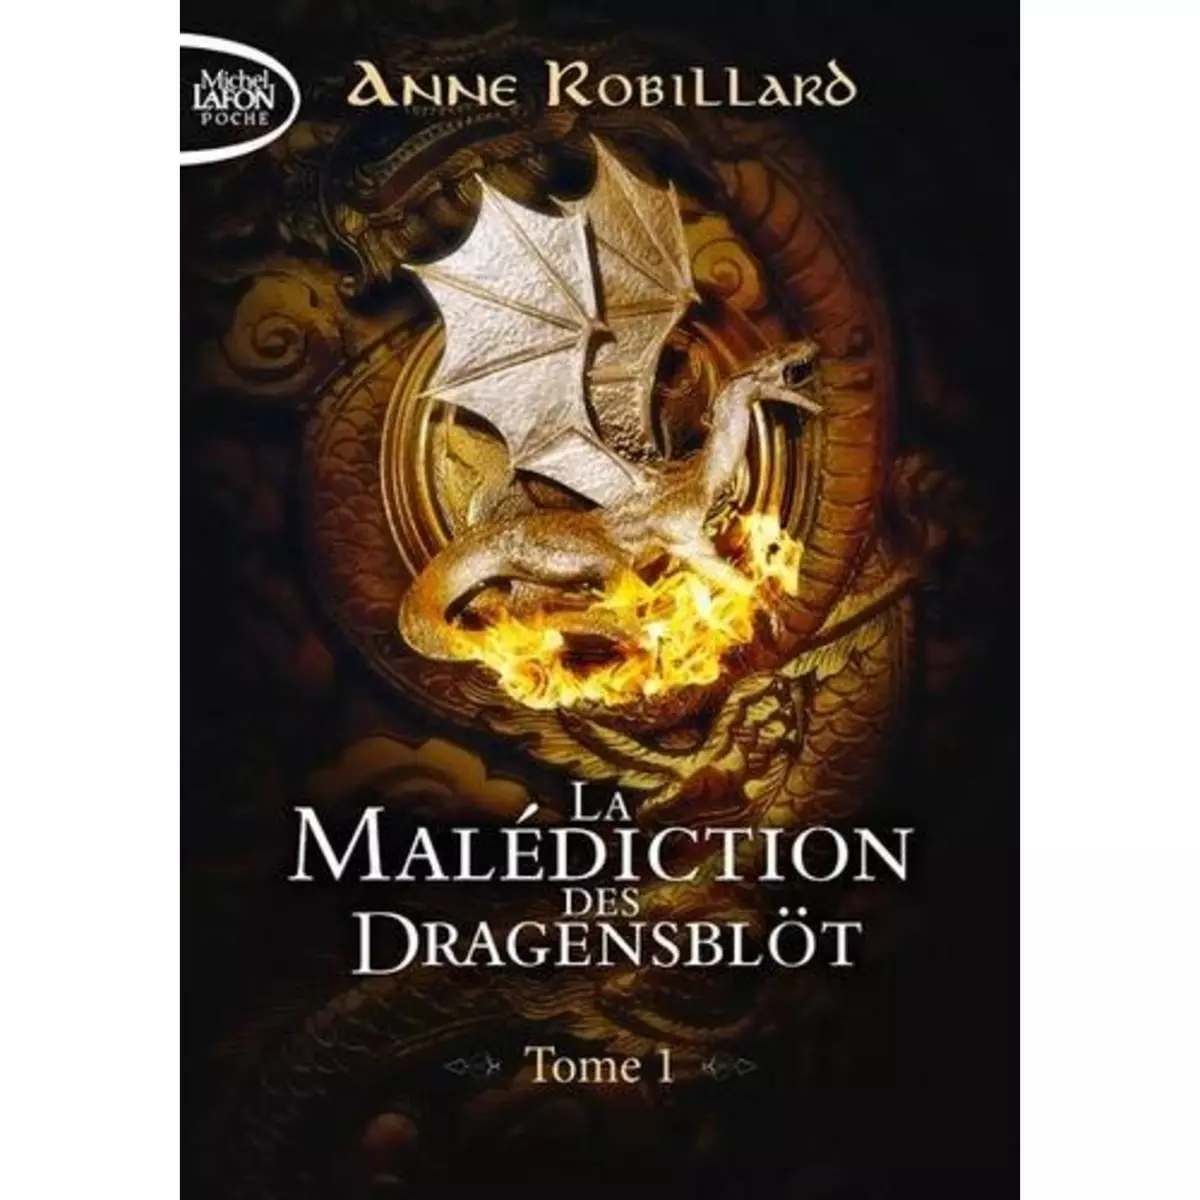  LA MALEDICTION DES DRAGENSBLOT TOME 1 : LE CHATEAU, Robillard Anne